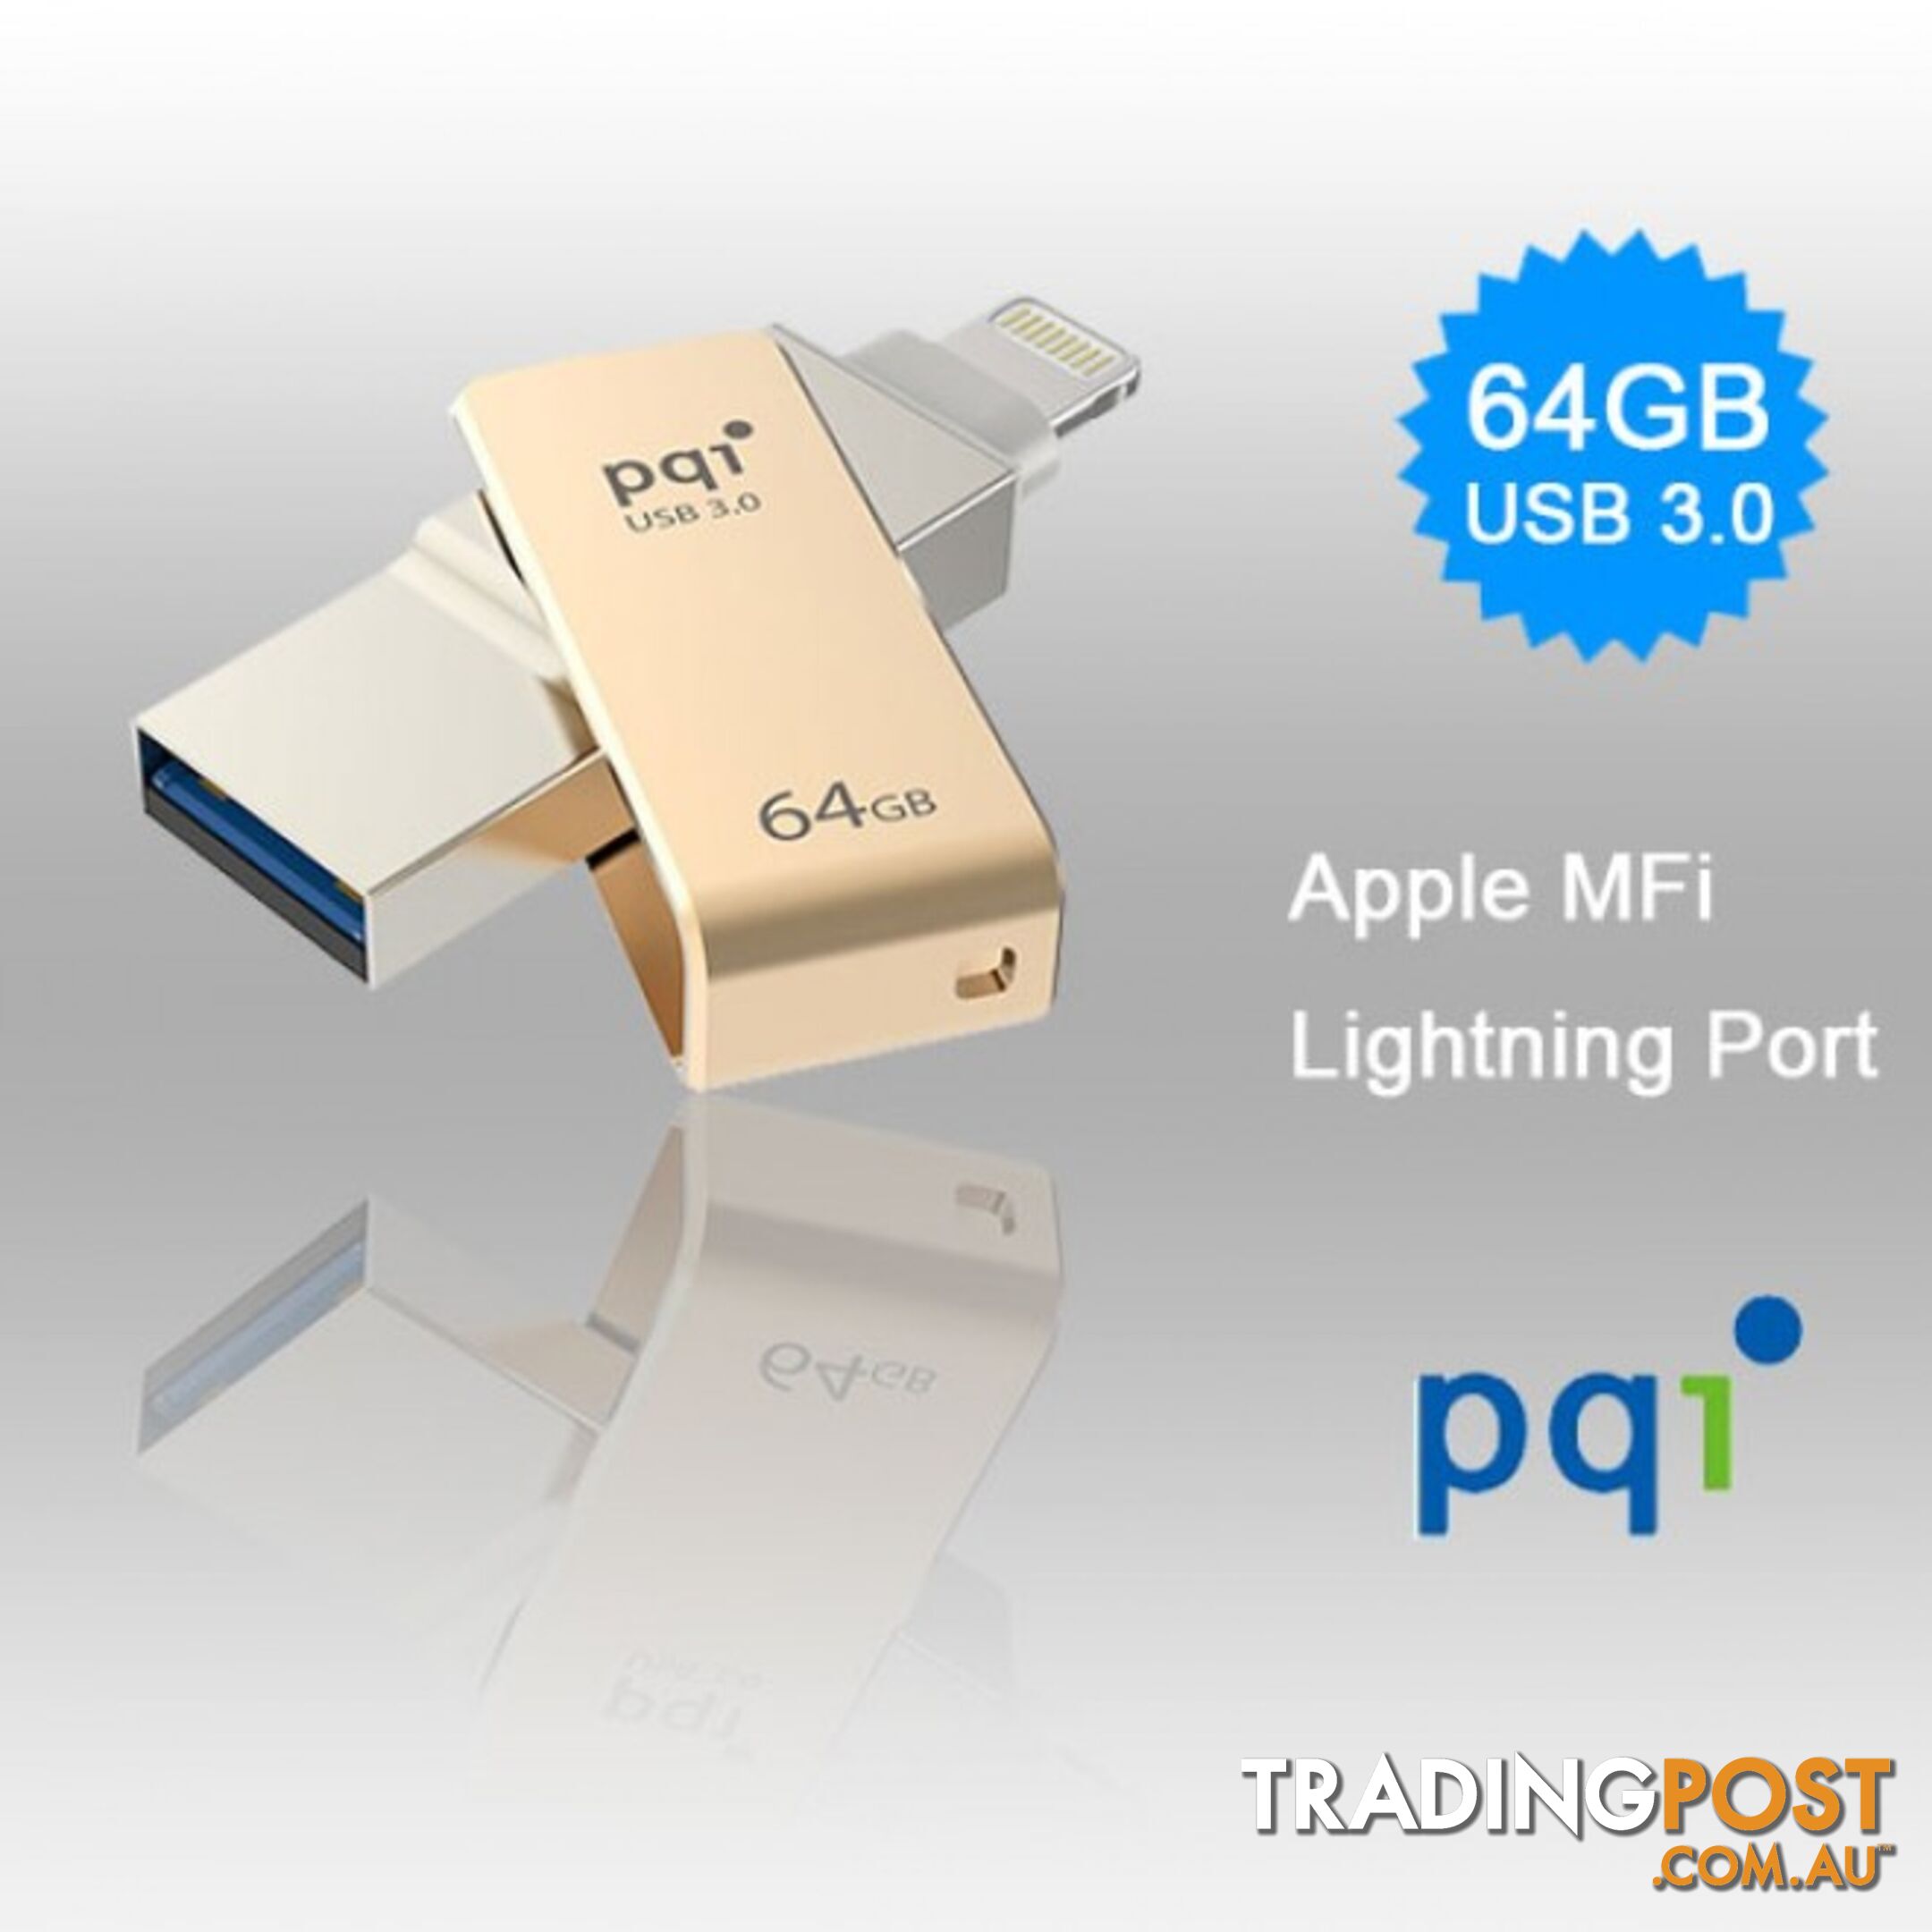 PQI iConnect Mini 6I04-064GR2001 Gold [Apple MFi] 64 GB Mobile Flash Drive w/ Lightning Connector for iPhones iPads Mac & PC USB 3.0 (6I04-064GR2001)